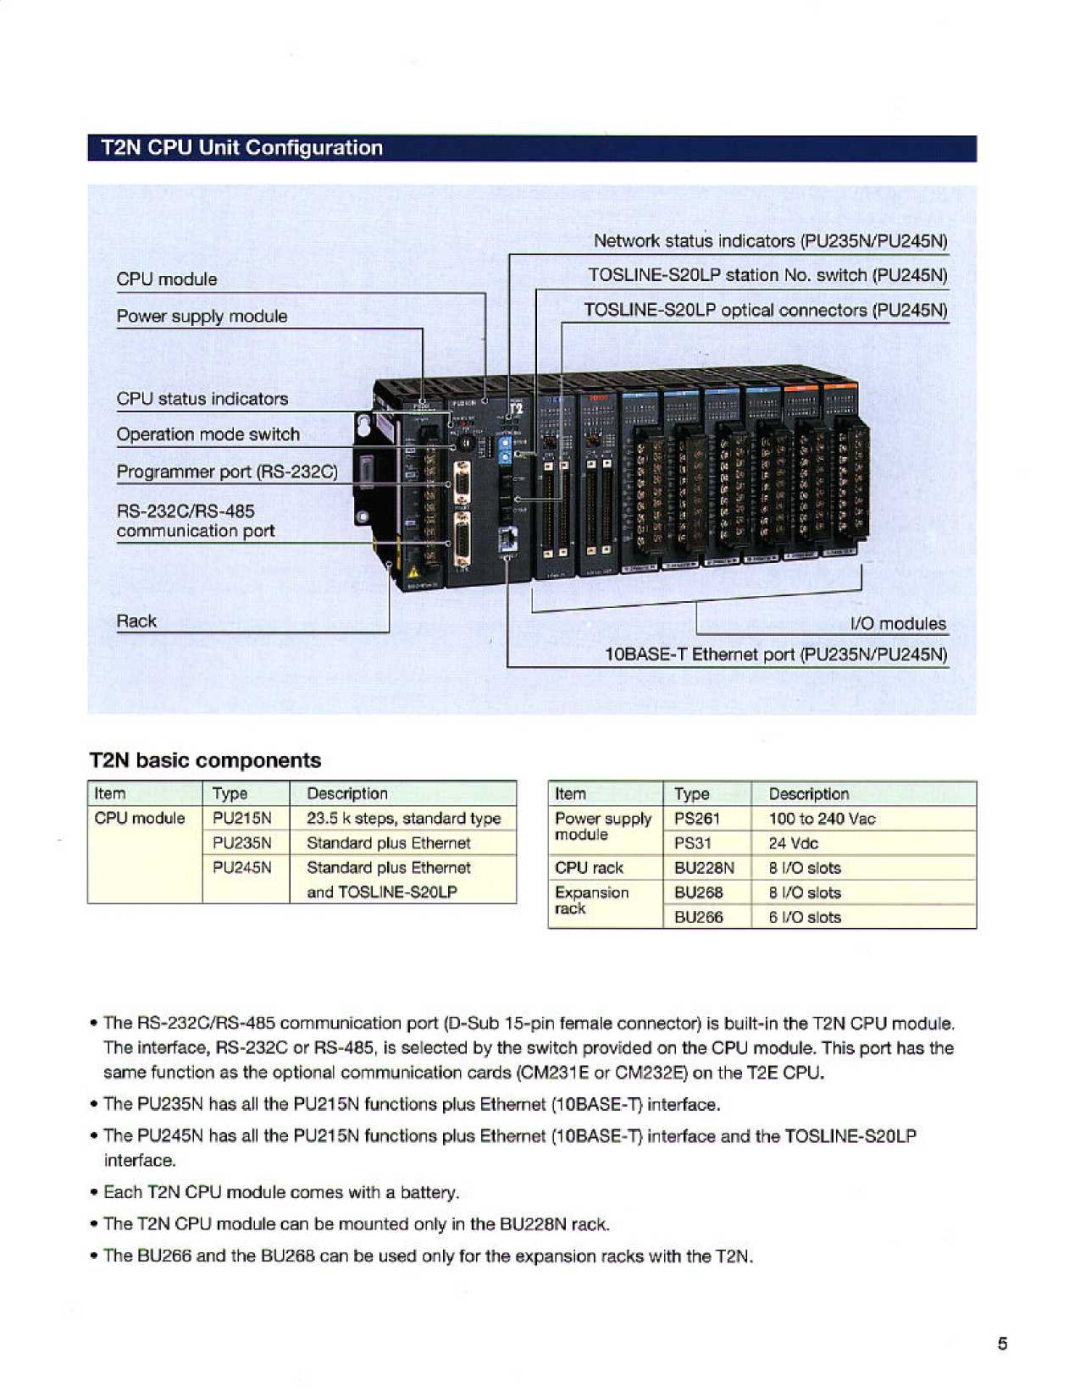 Toshiba T2E manual T2N CPU Unit Configuration, Standard plus Ethernet, Power supply, a 110 slots 